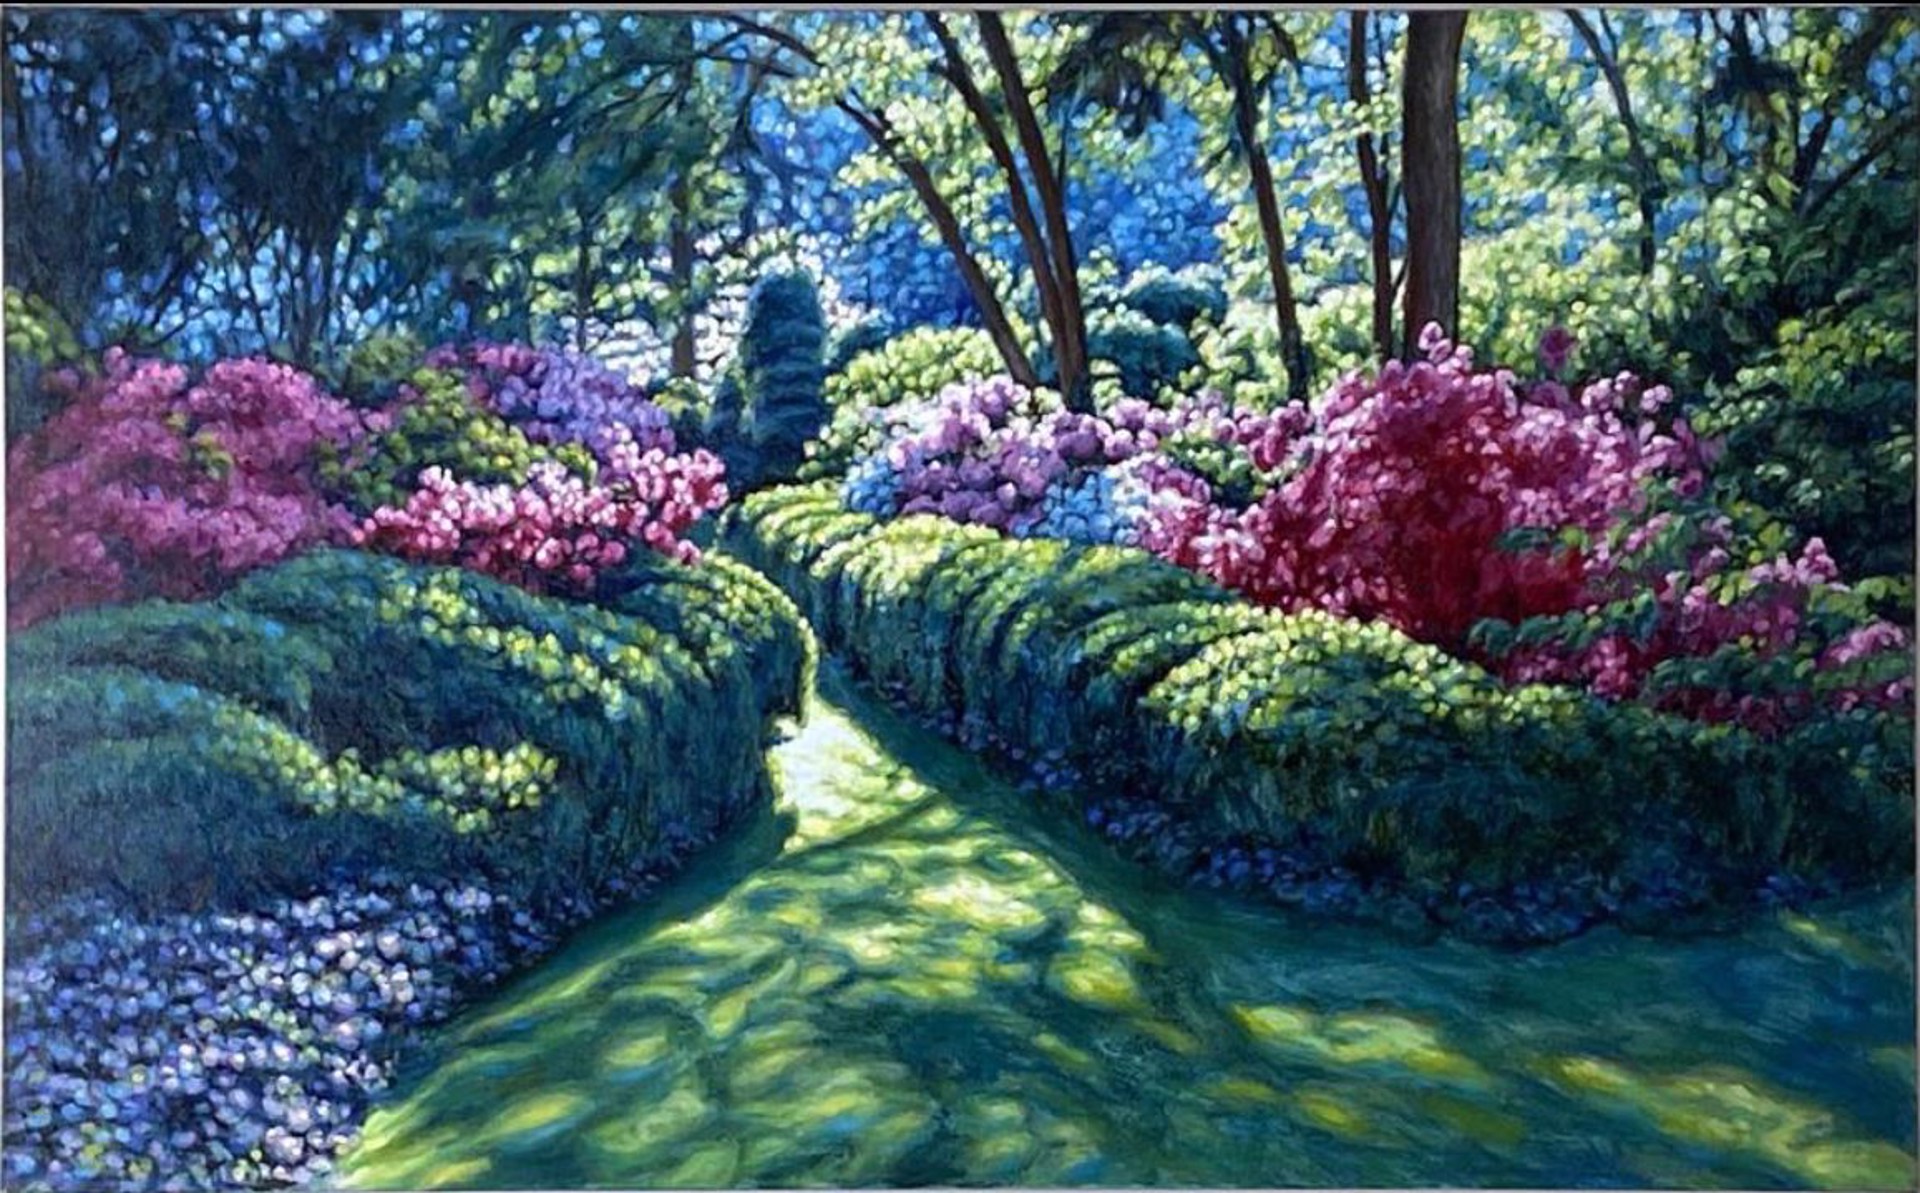 Gloriously Glowing Gardens SG-155 by Eddie Mitchell